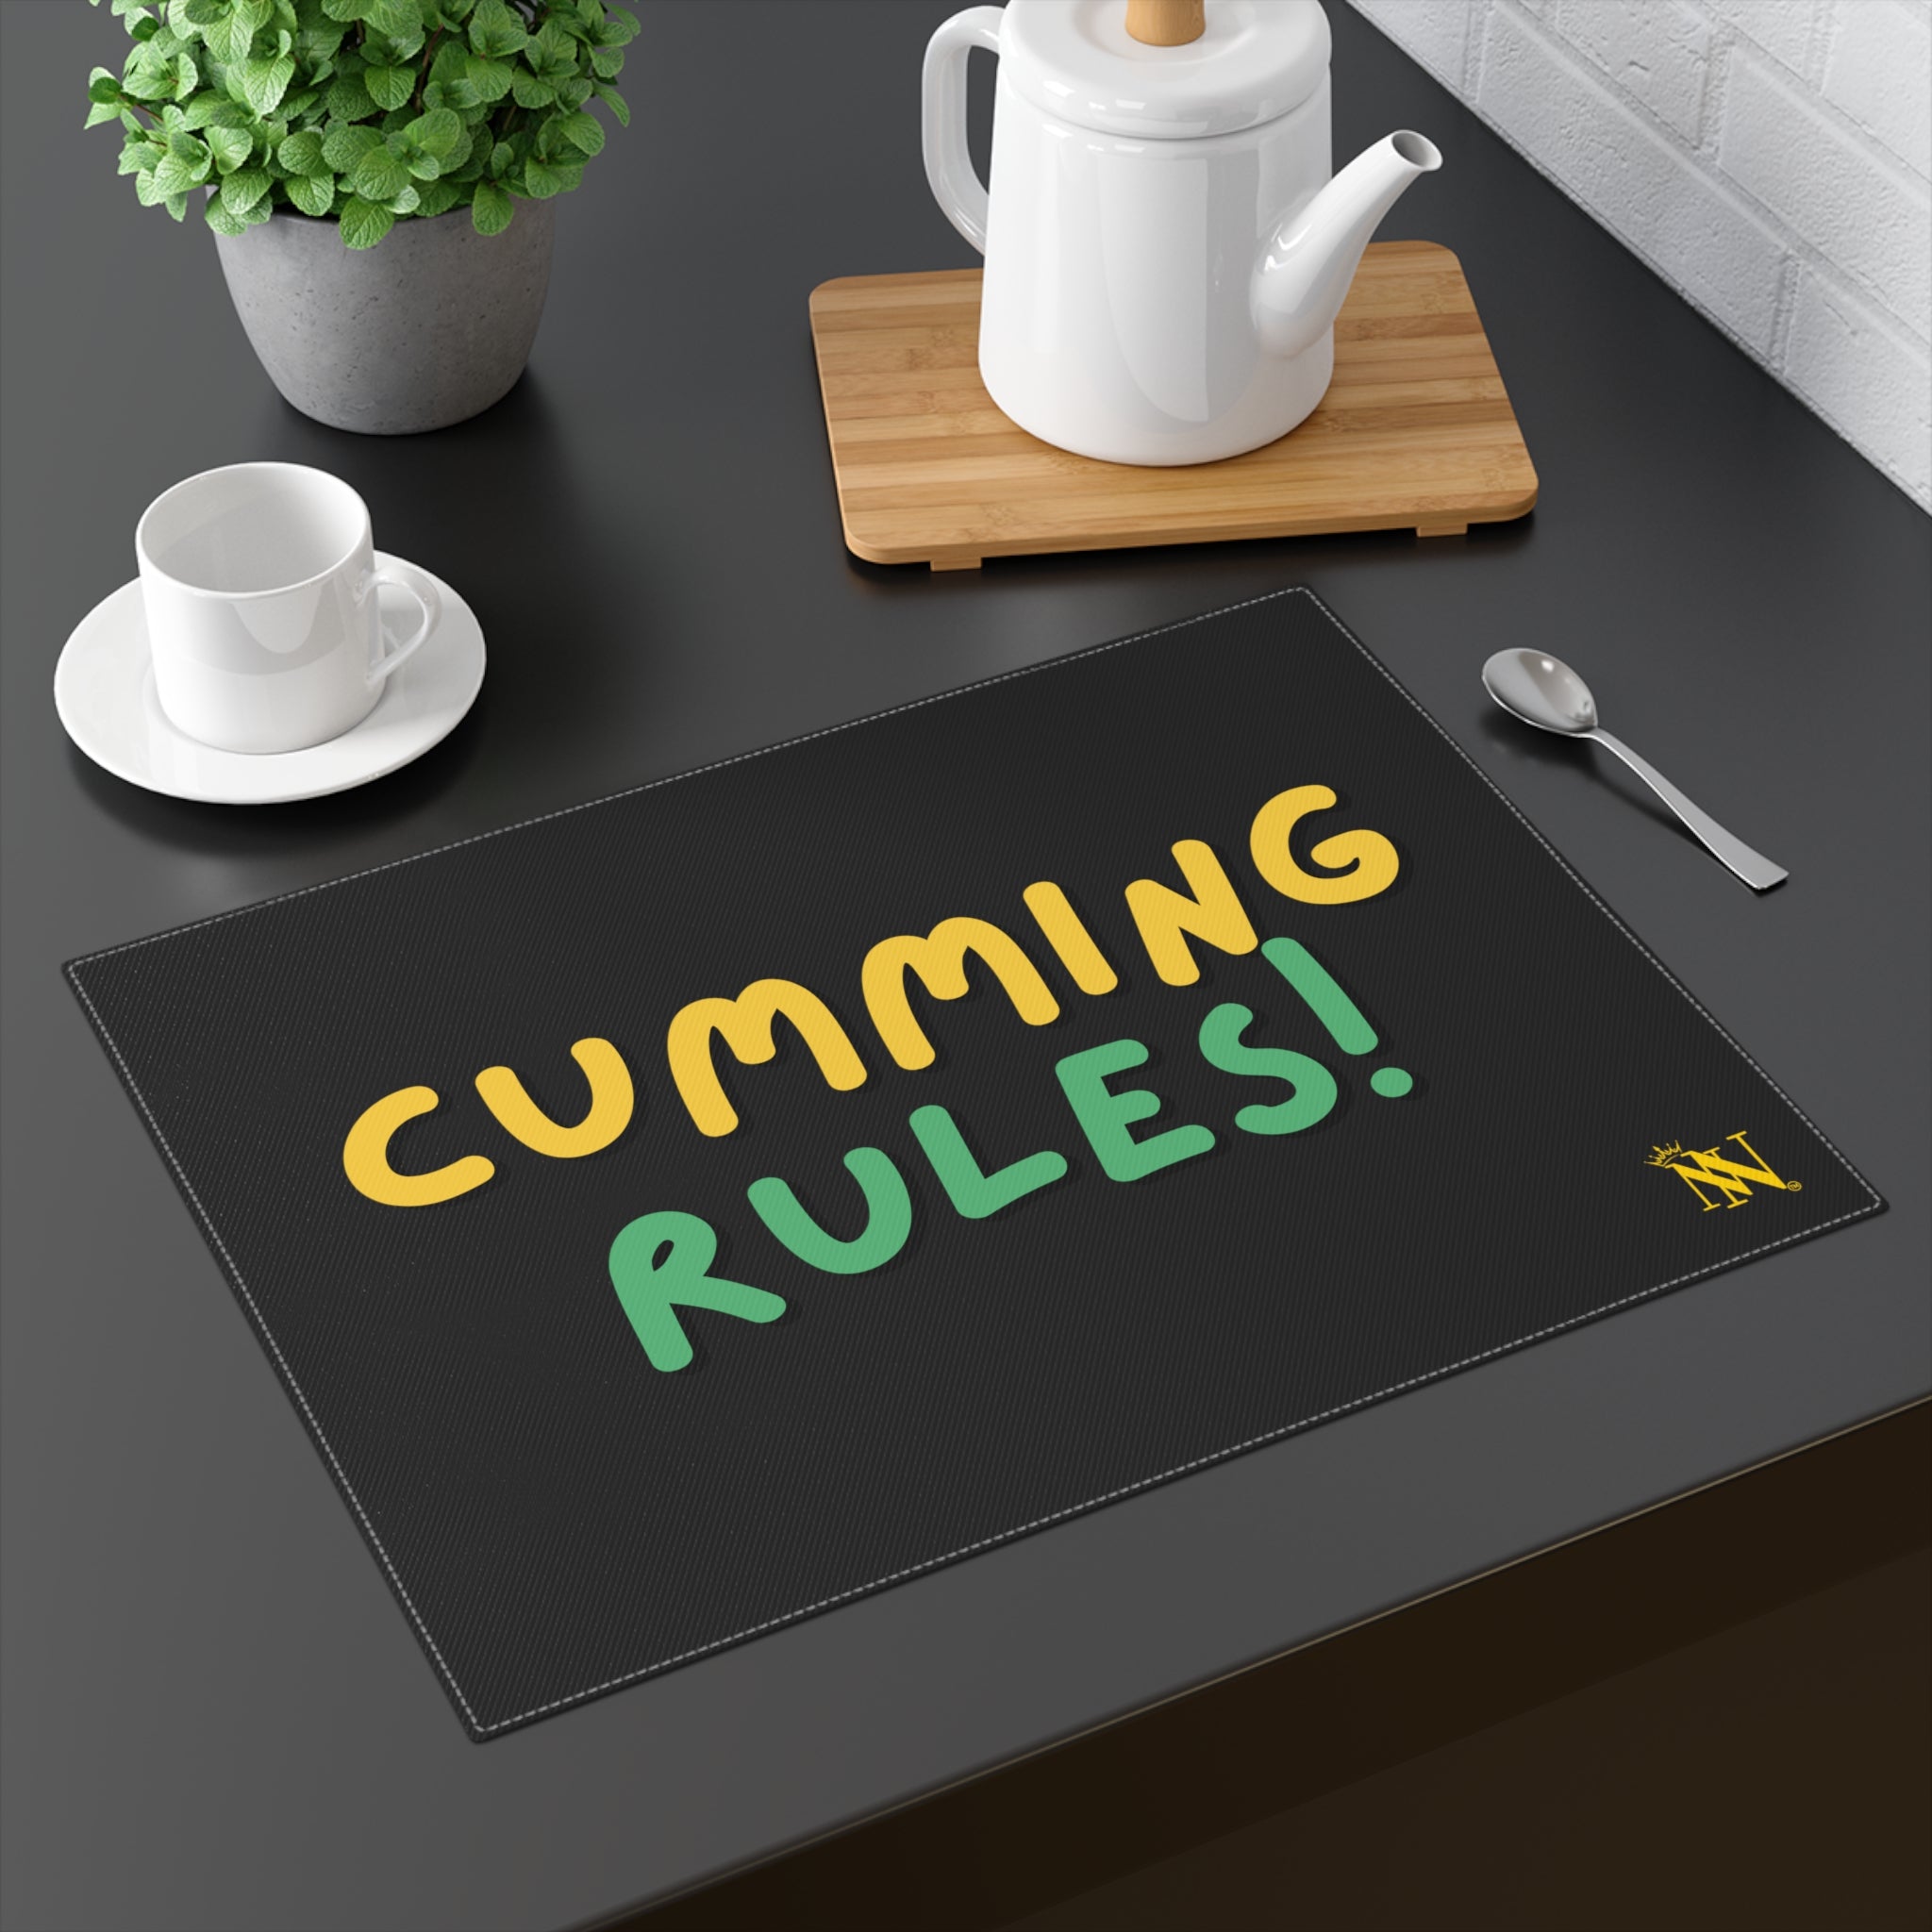 Cumming rules sex toys mat